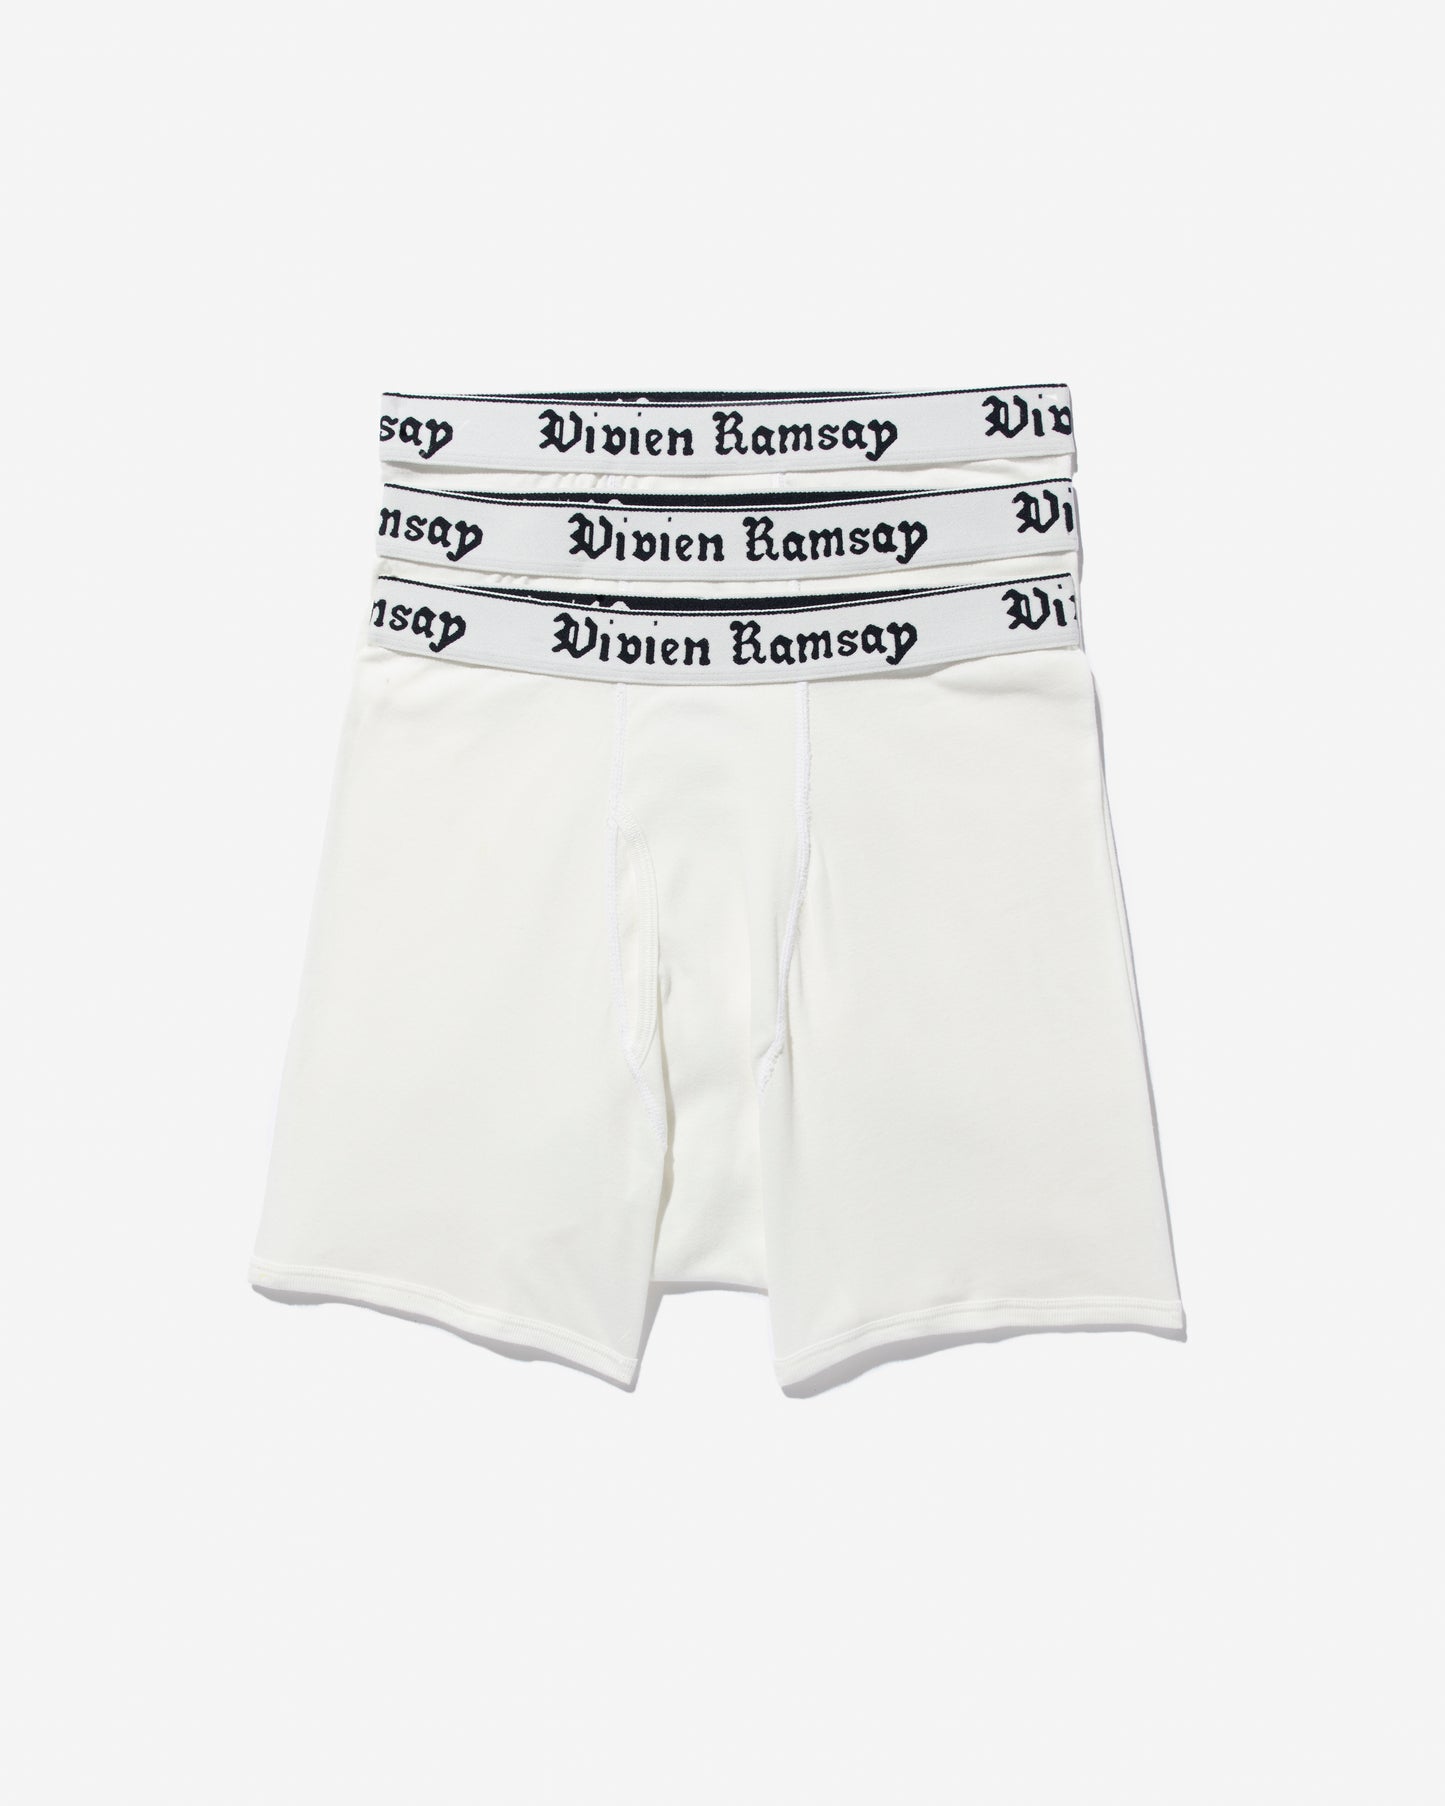 Boxer Brief White (3 Pack) – Vivien Ramsay